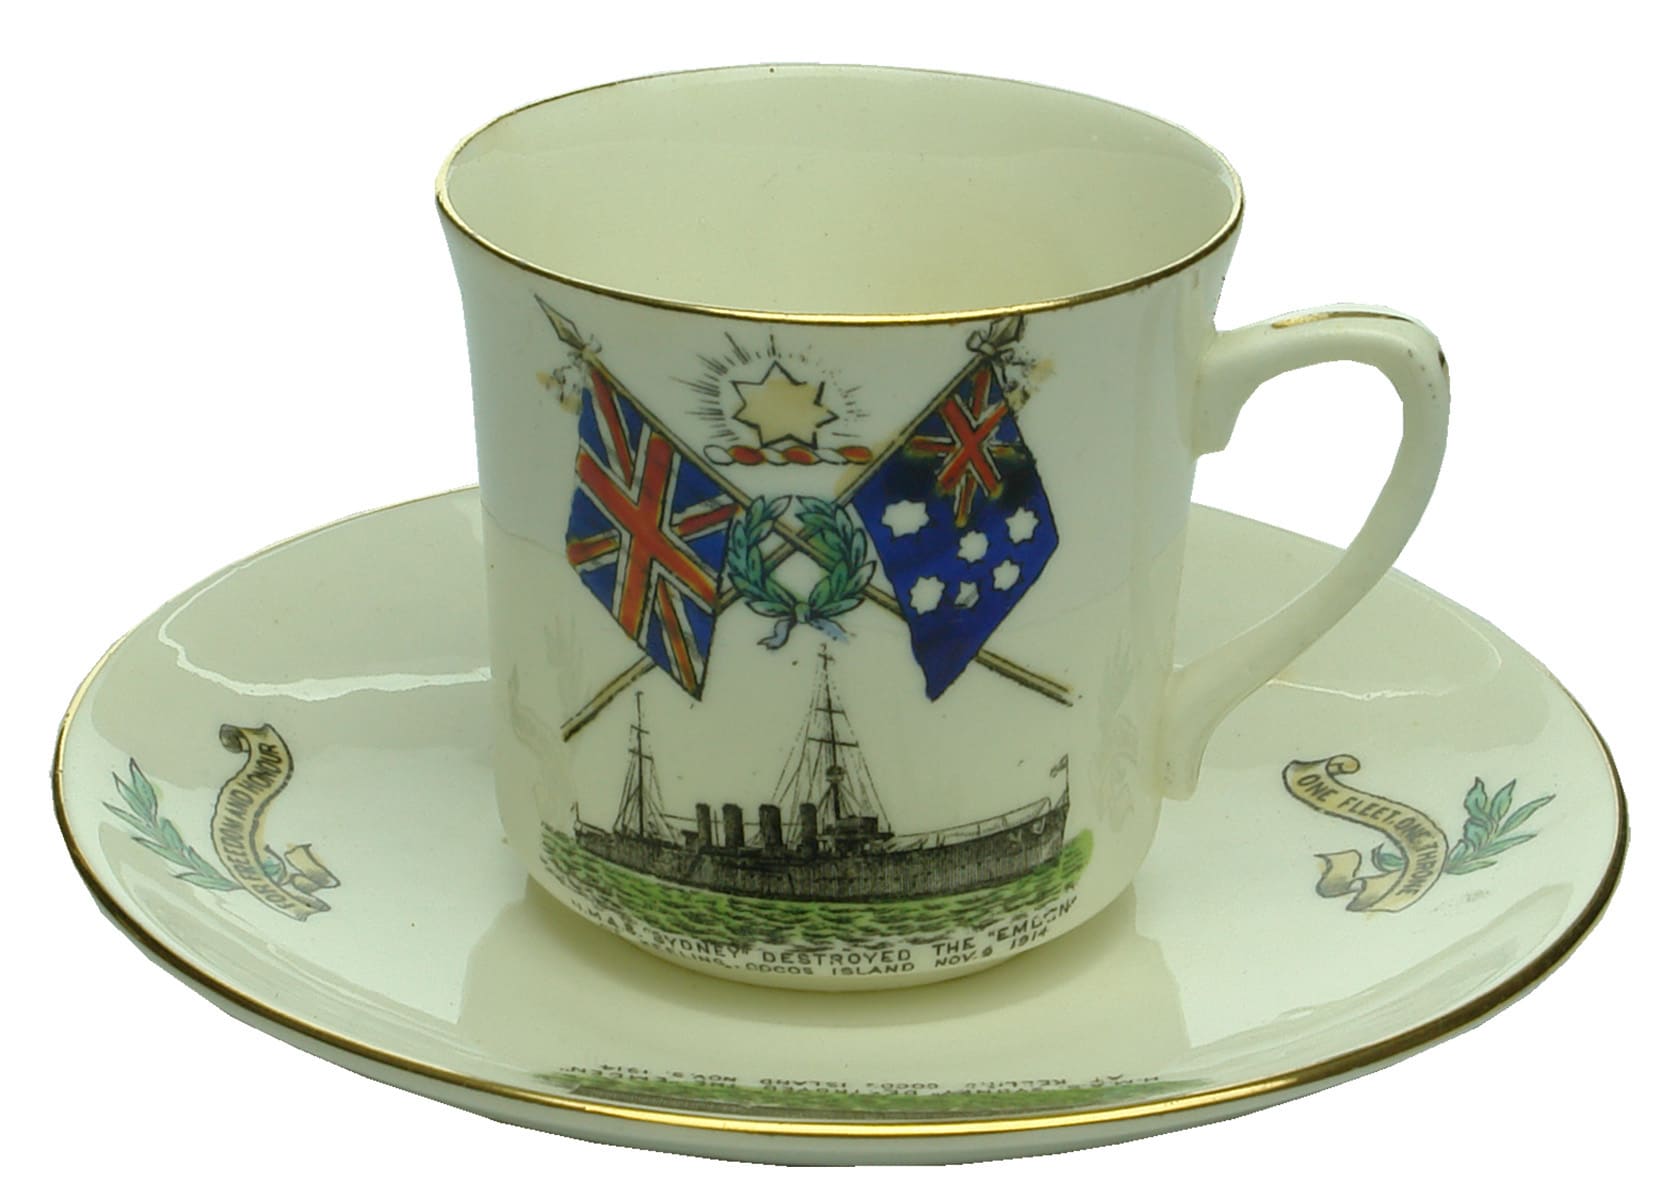 HMAS Sydney Emden Commemorative Cup Saucer Plate